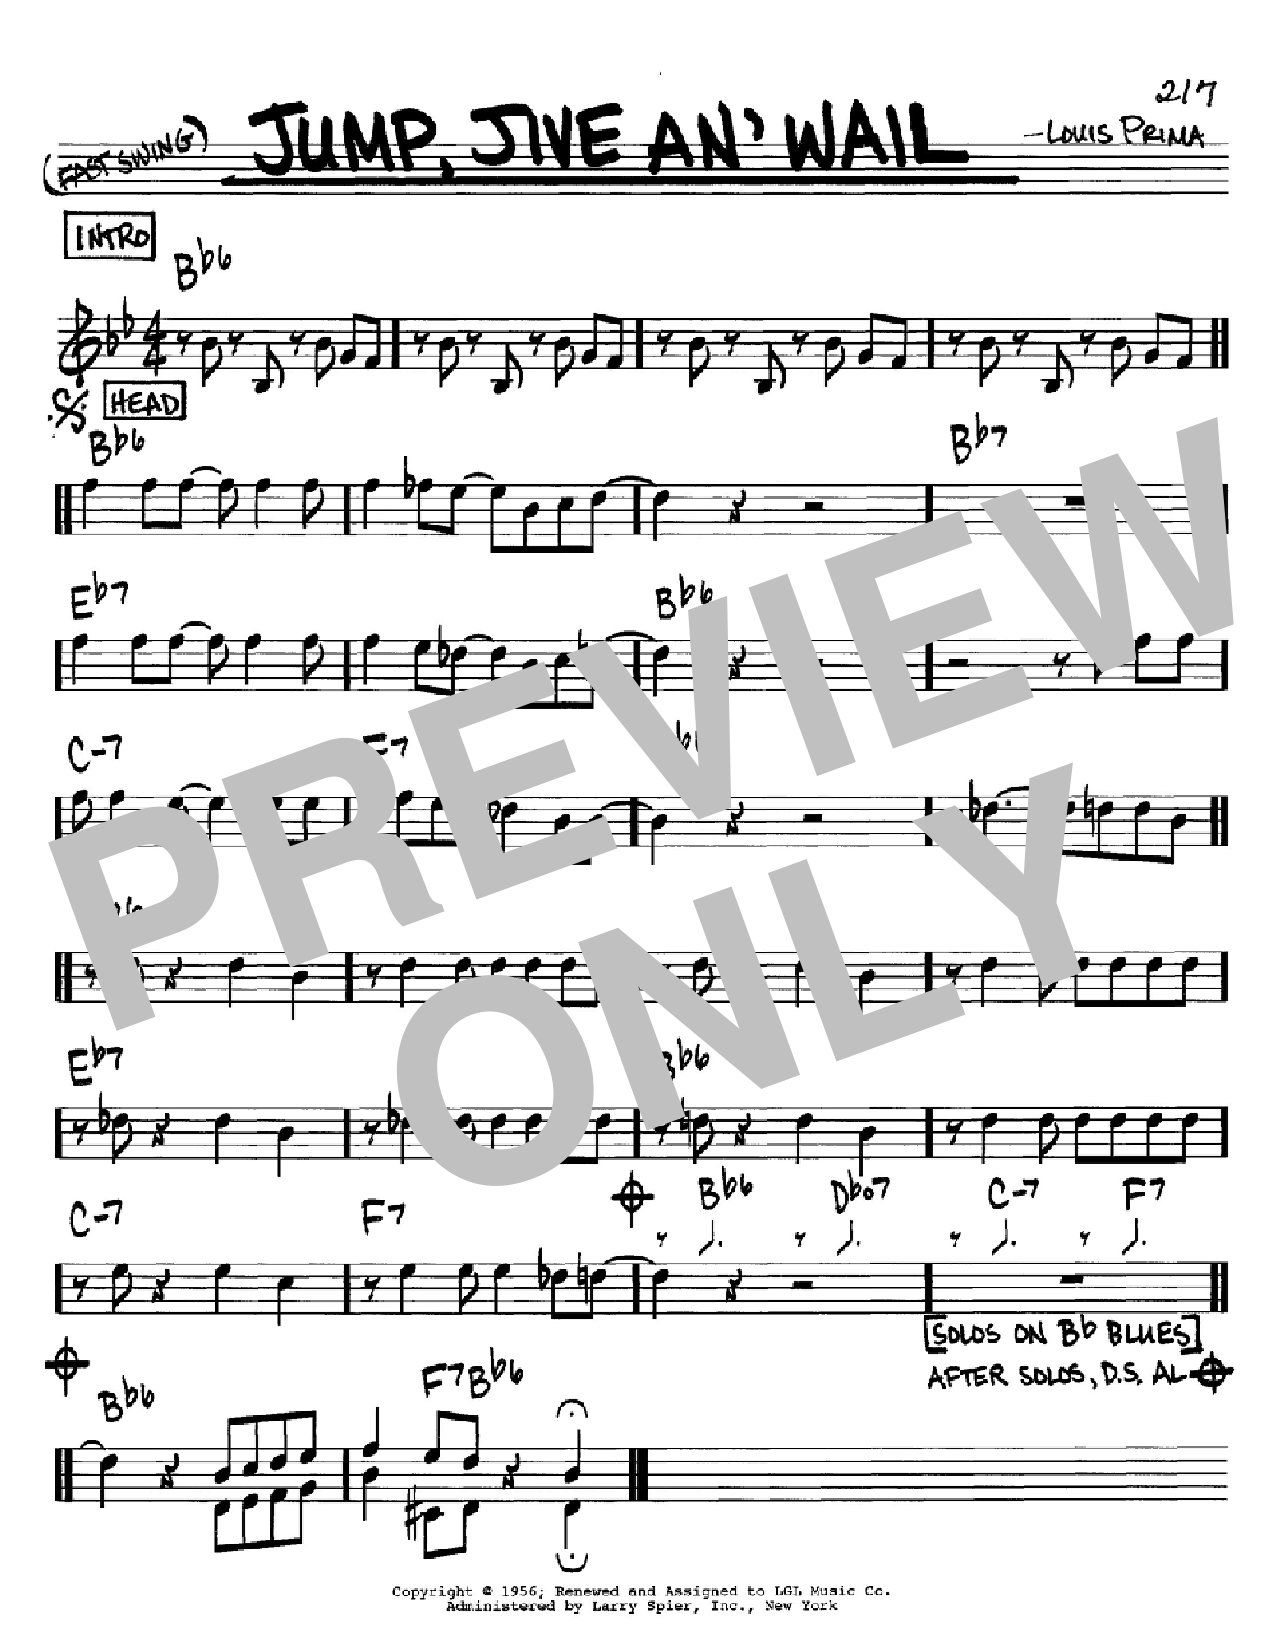 Louis Prima Jump, Jive An' Wail Sheet Music Notes & Chords for Clarinet - Download or Print PDF